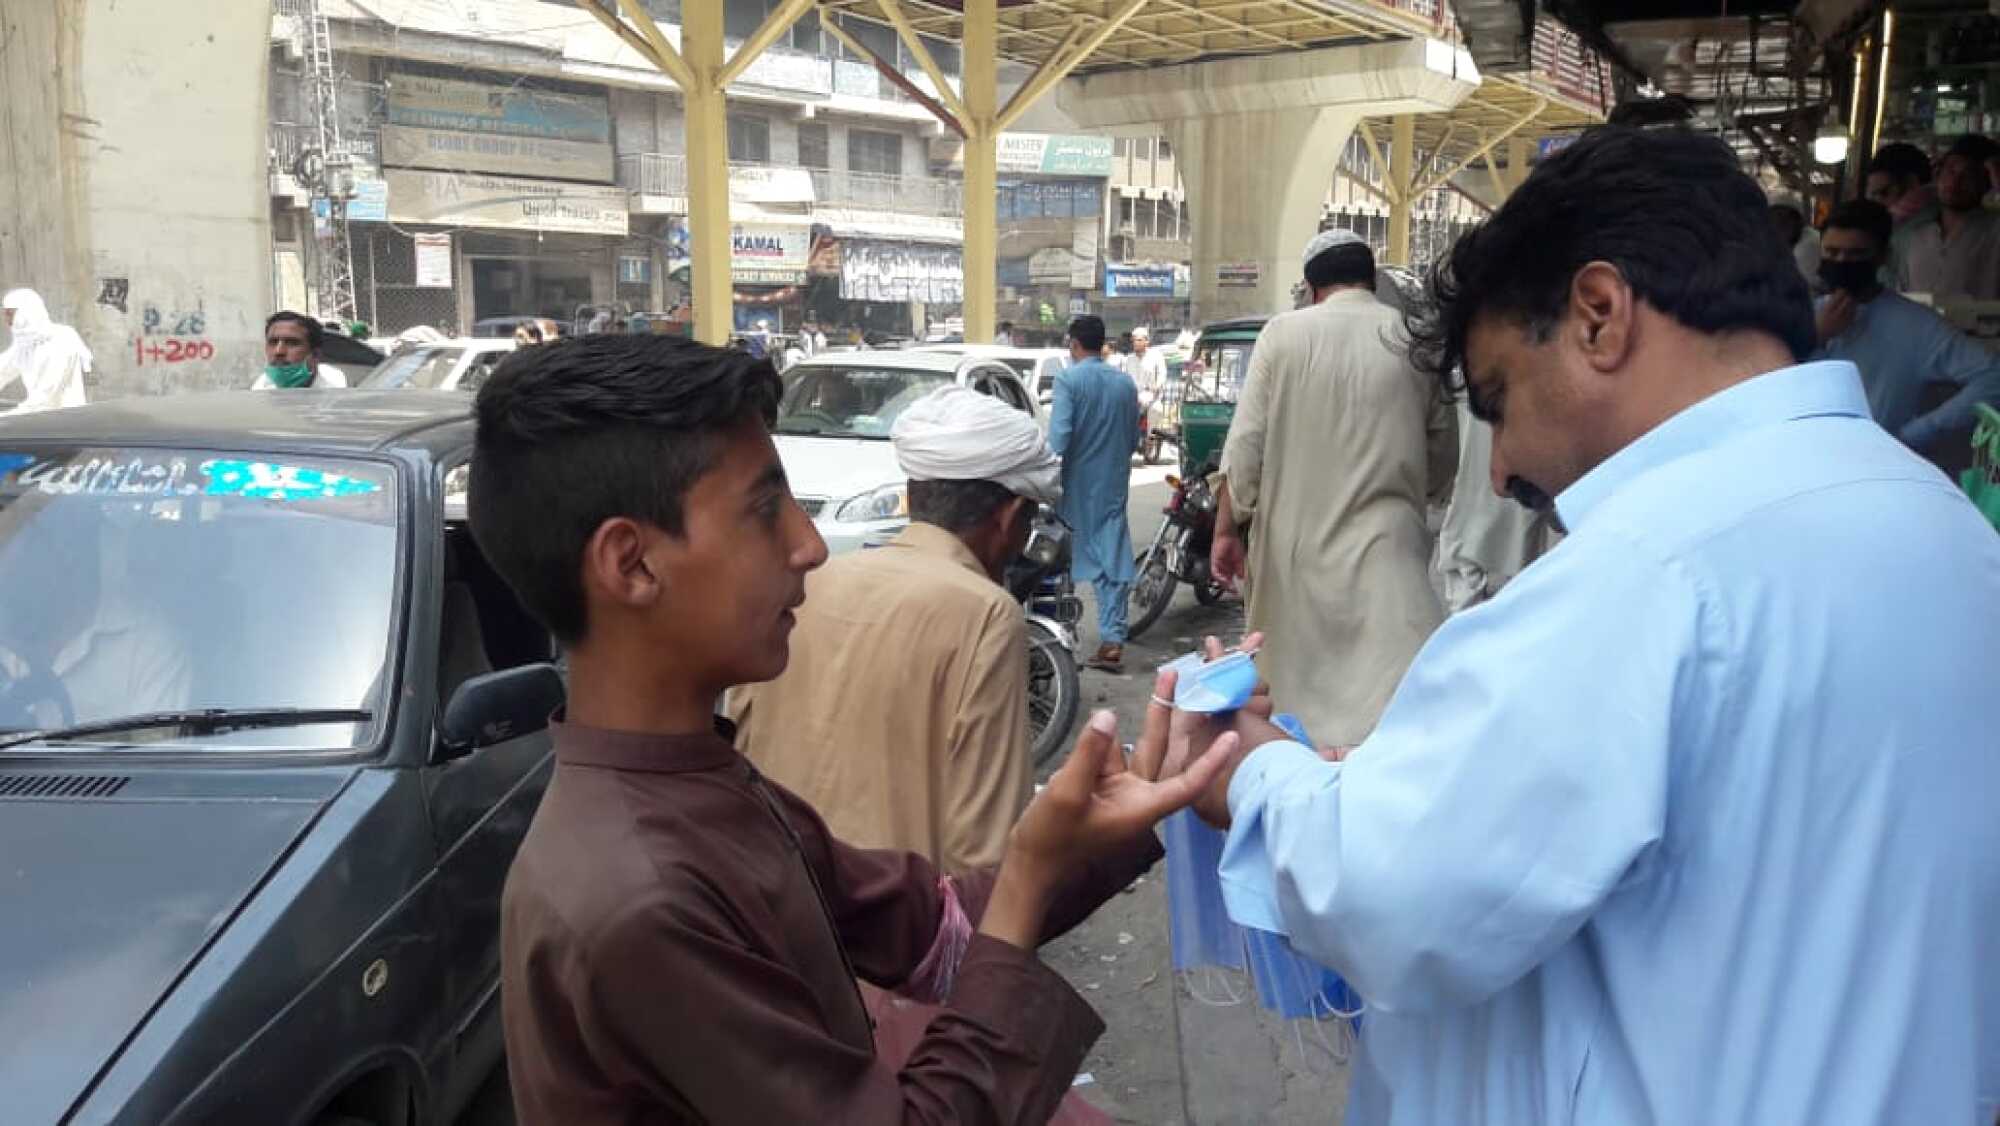 Thirteen-year-old Junaid, left, sells masks in the Khyber Bazaar district of Peshawar, Pakistan.